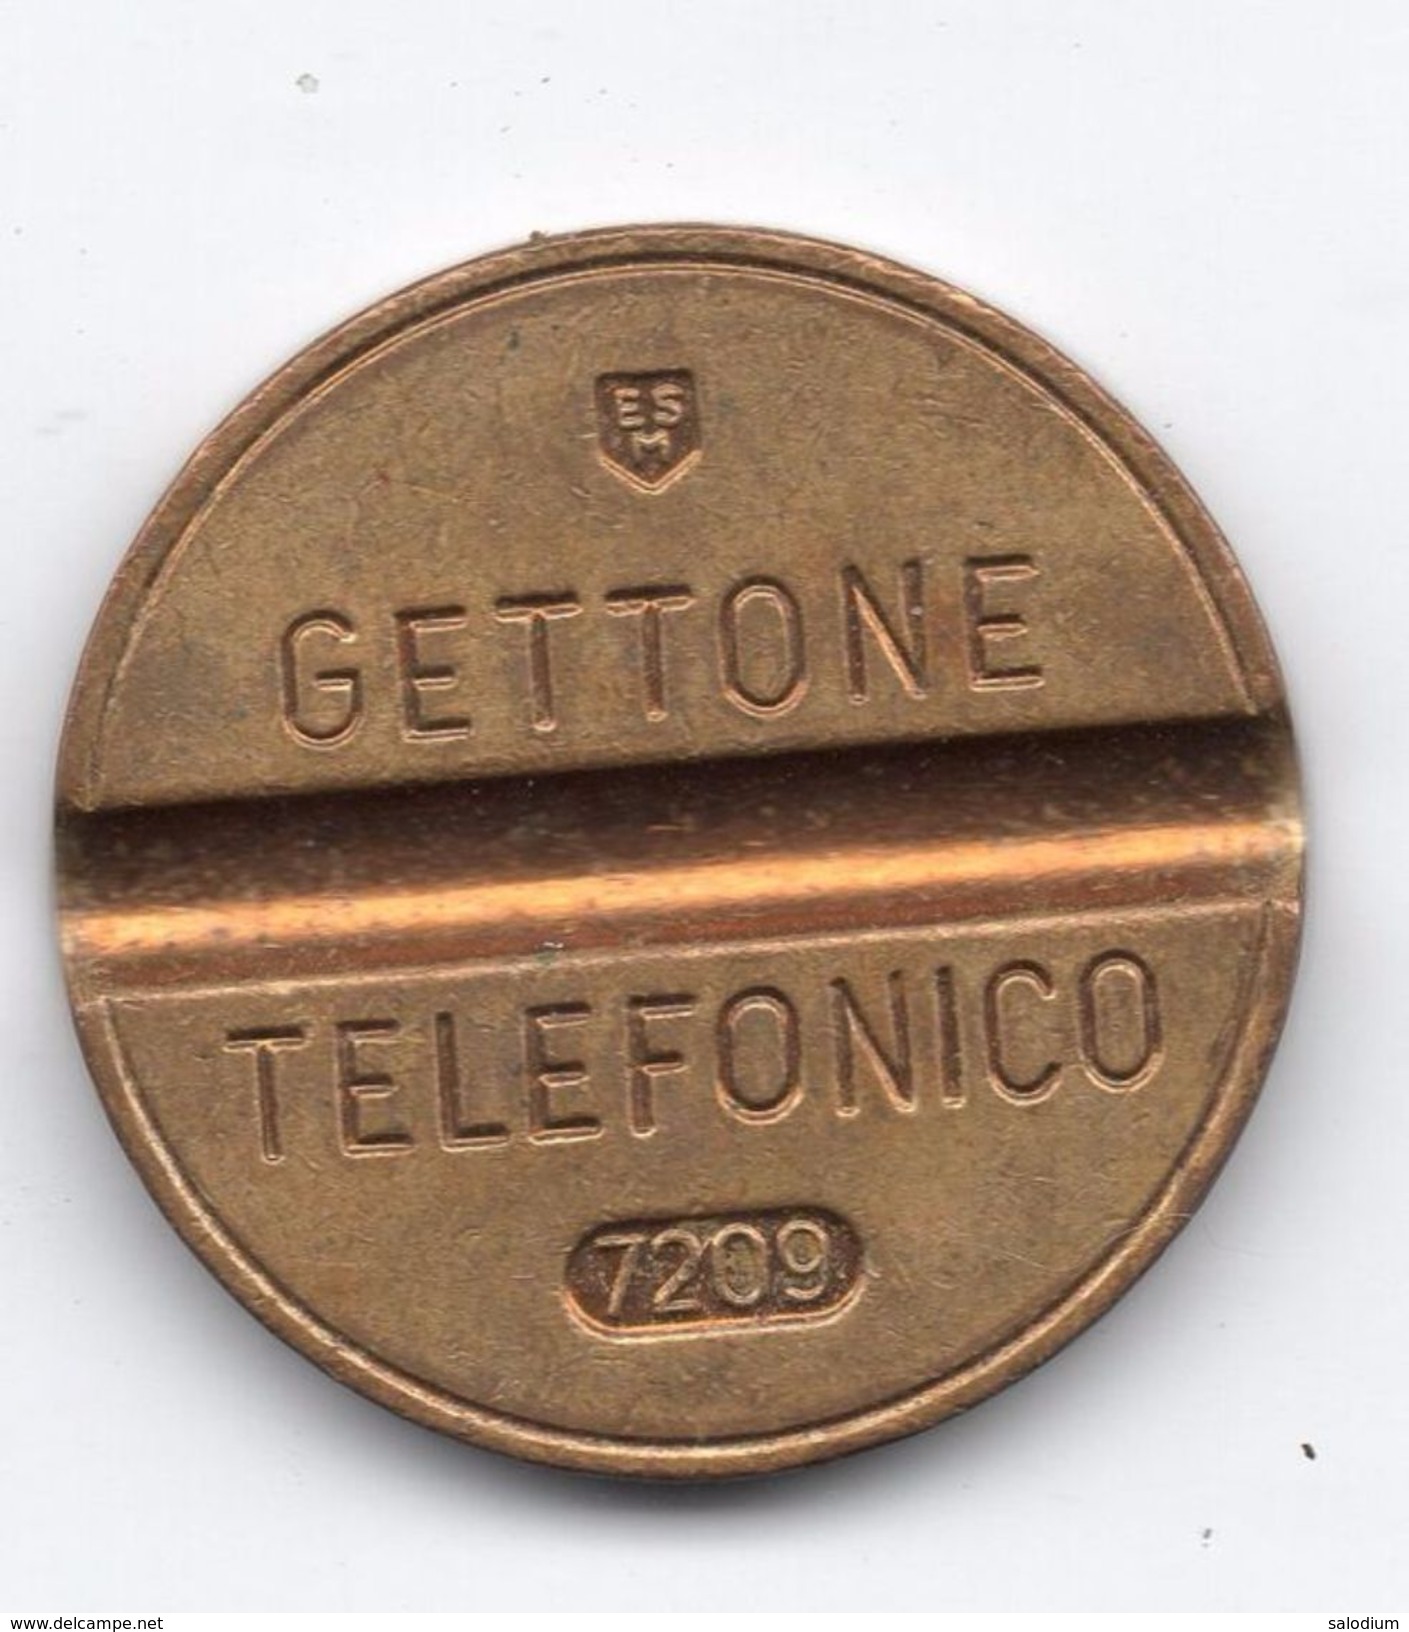 Gettone Telefonico 7209 Token Telephone - (Id-786) - Firma's